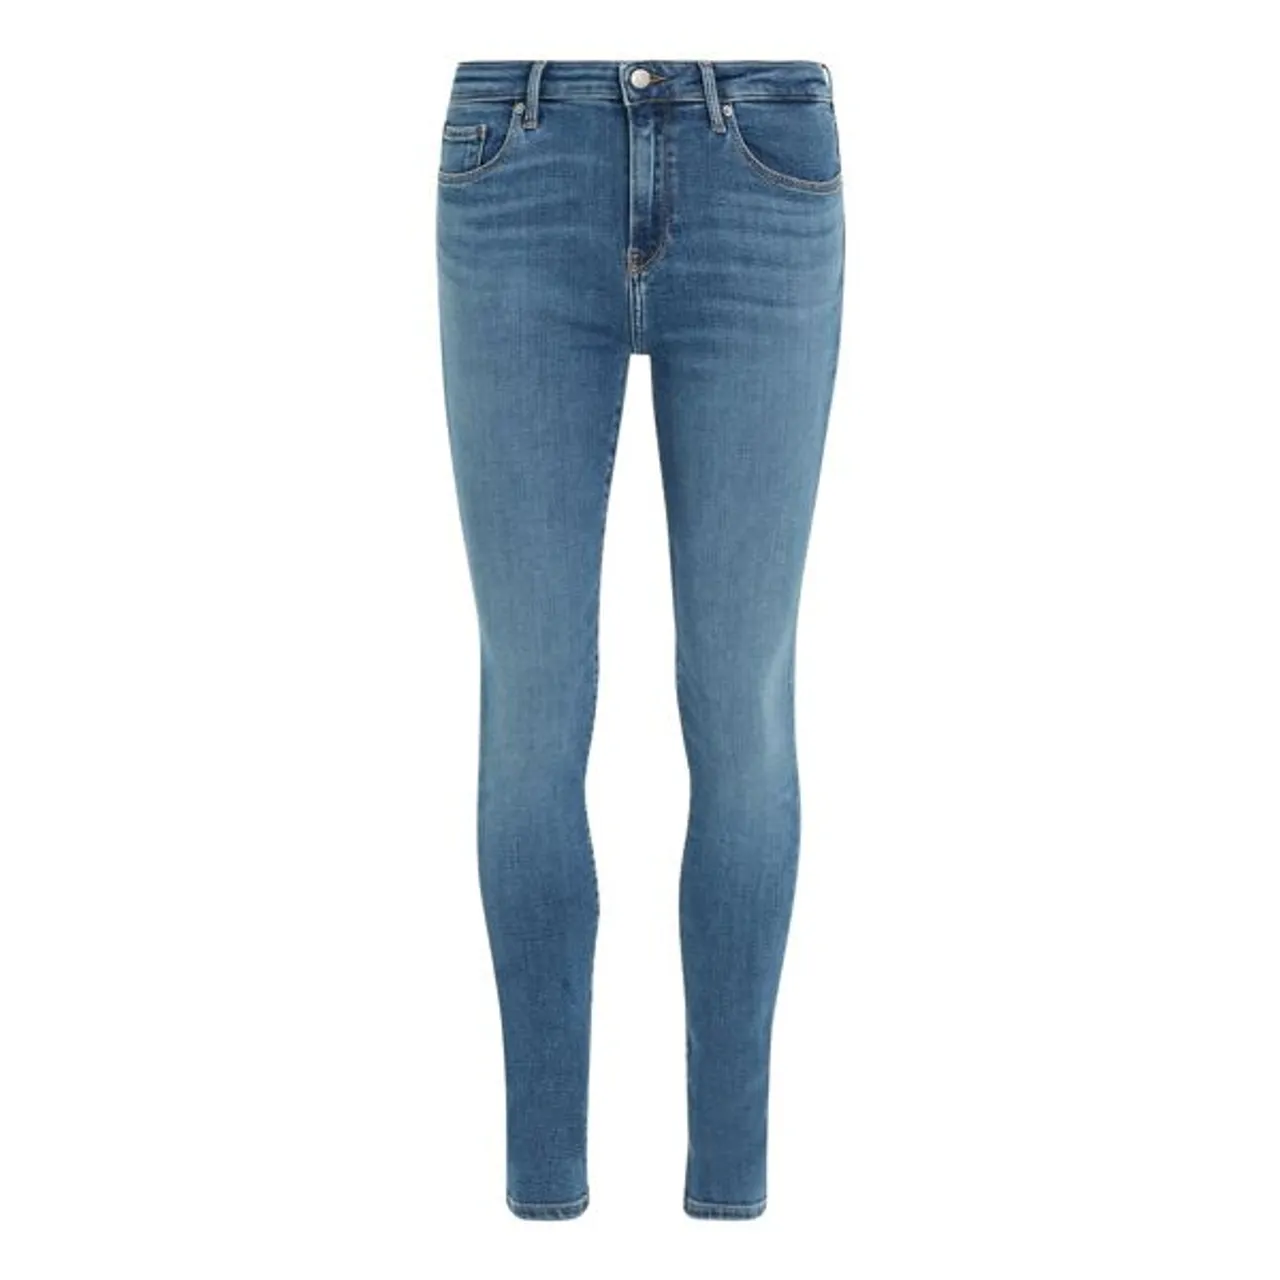 Skinny-fit-Jeans TOMMY HILFIGER "TH FLEX COMO SKINNY RW GYA" Gr. 25, Länge 32, blau (mel) Damen Jeans Röhrenjeans